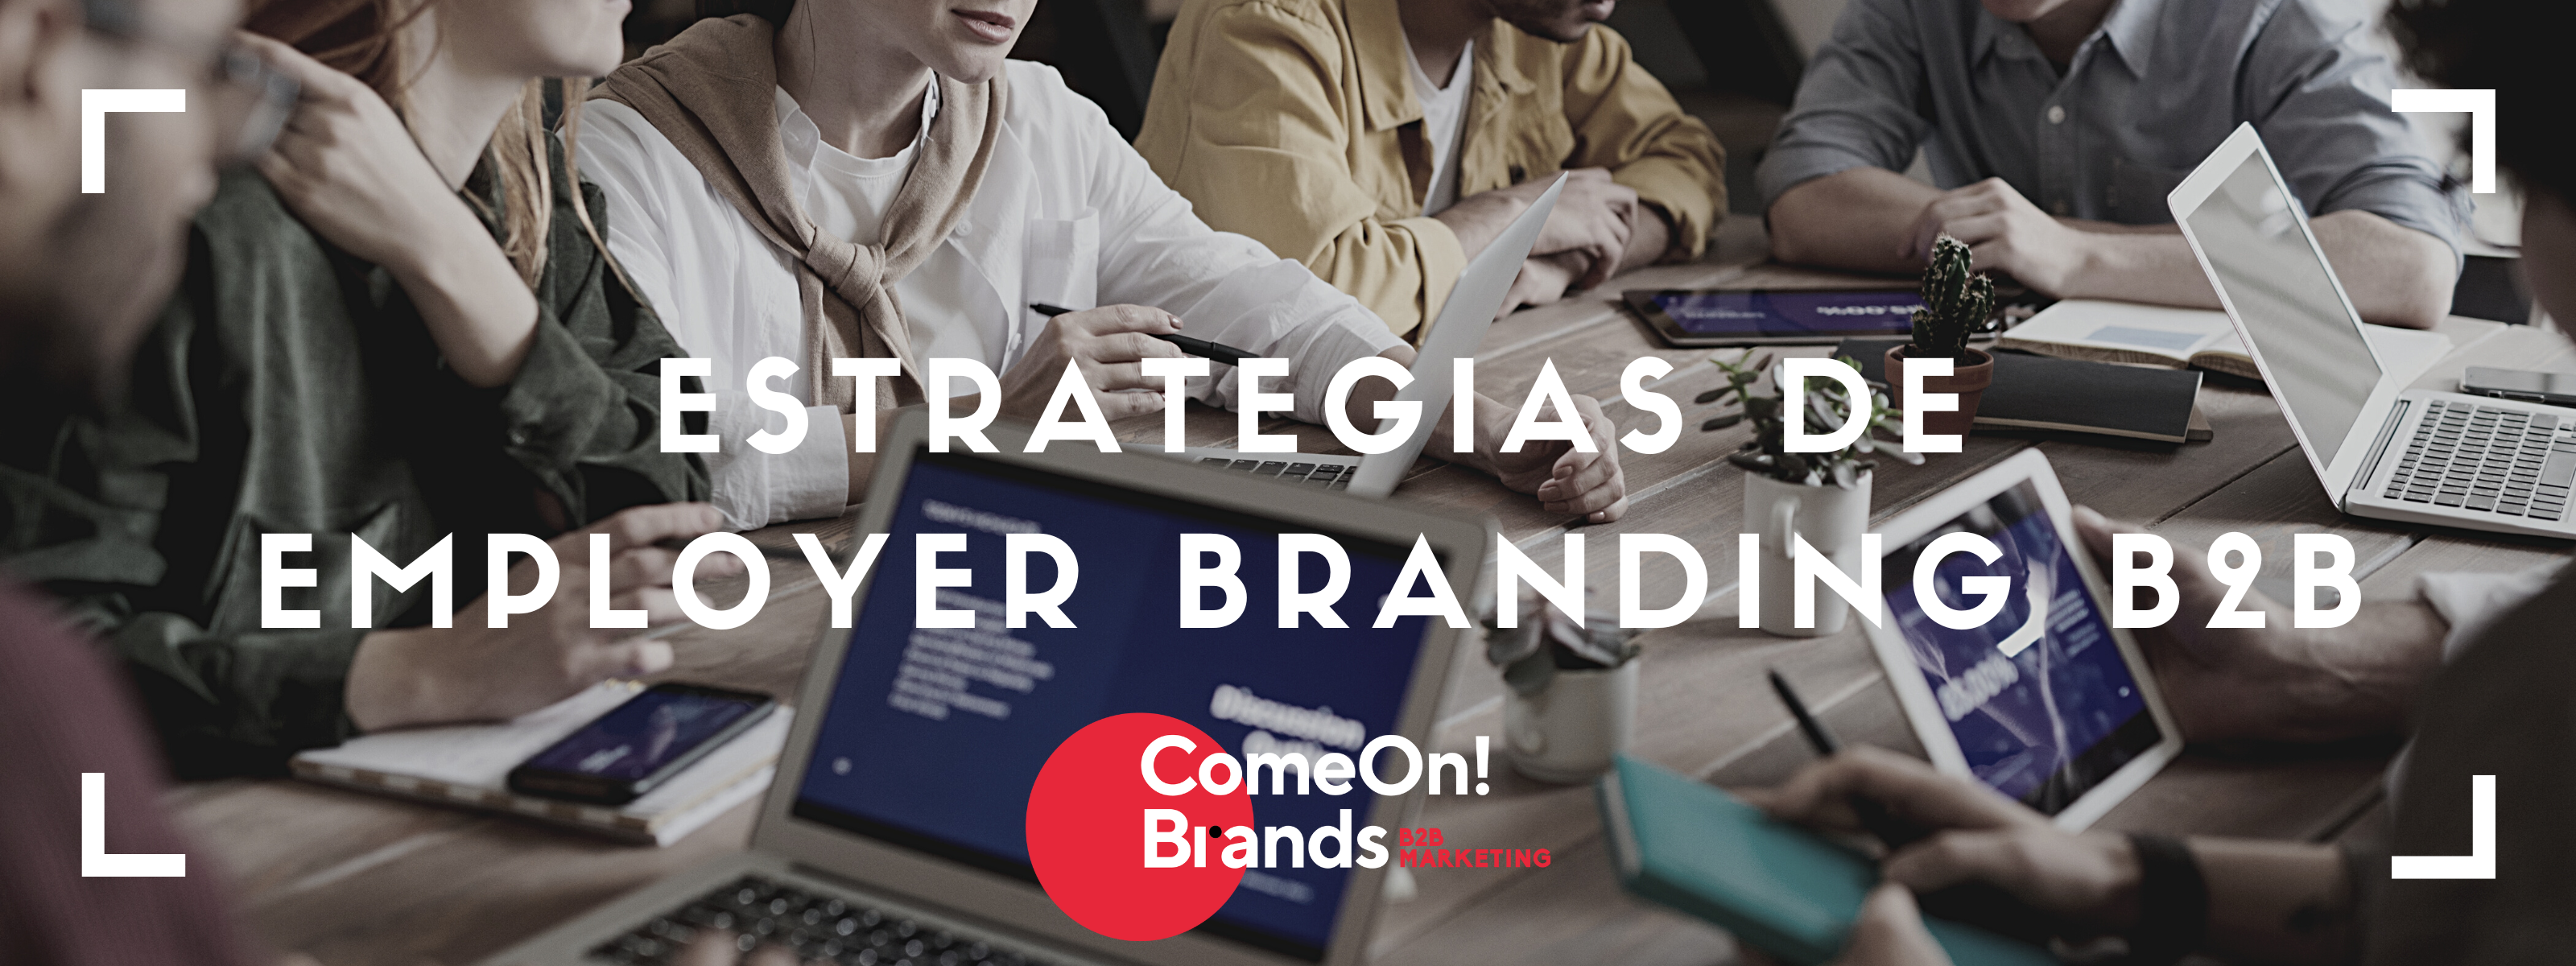 Estrategias de Employer Branding B2B